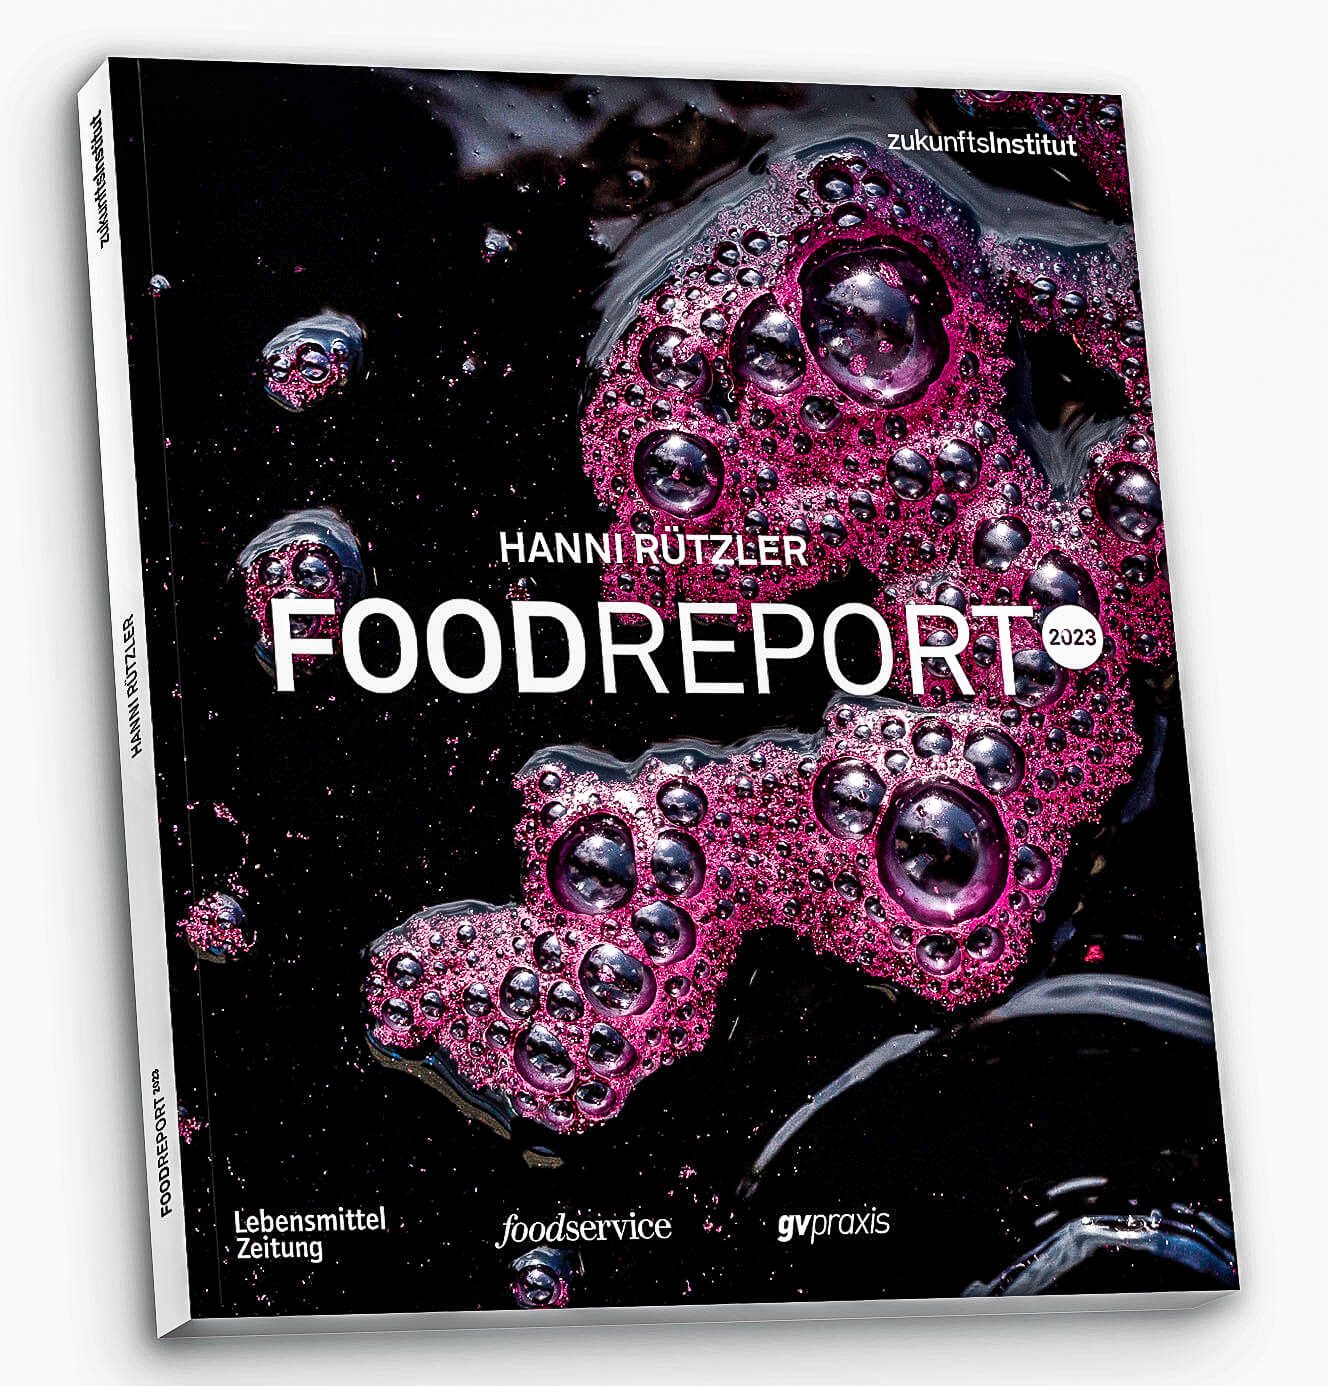 Food Report 2023 by Hanni Rützler